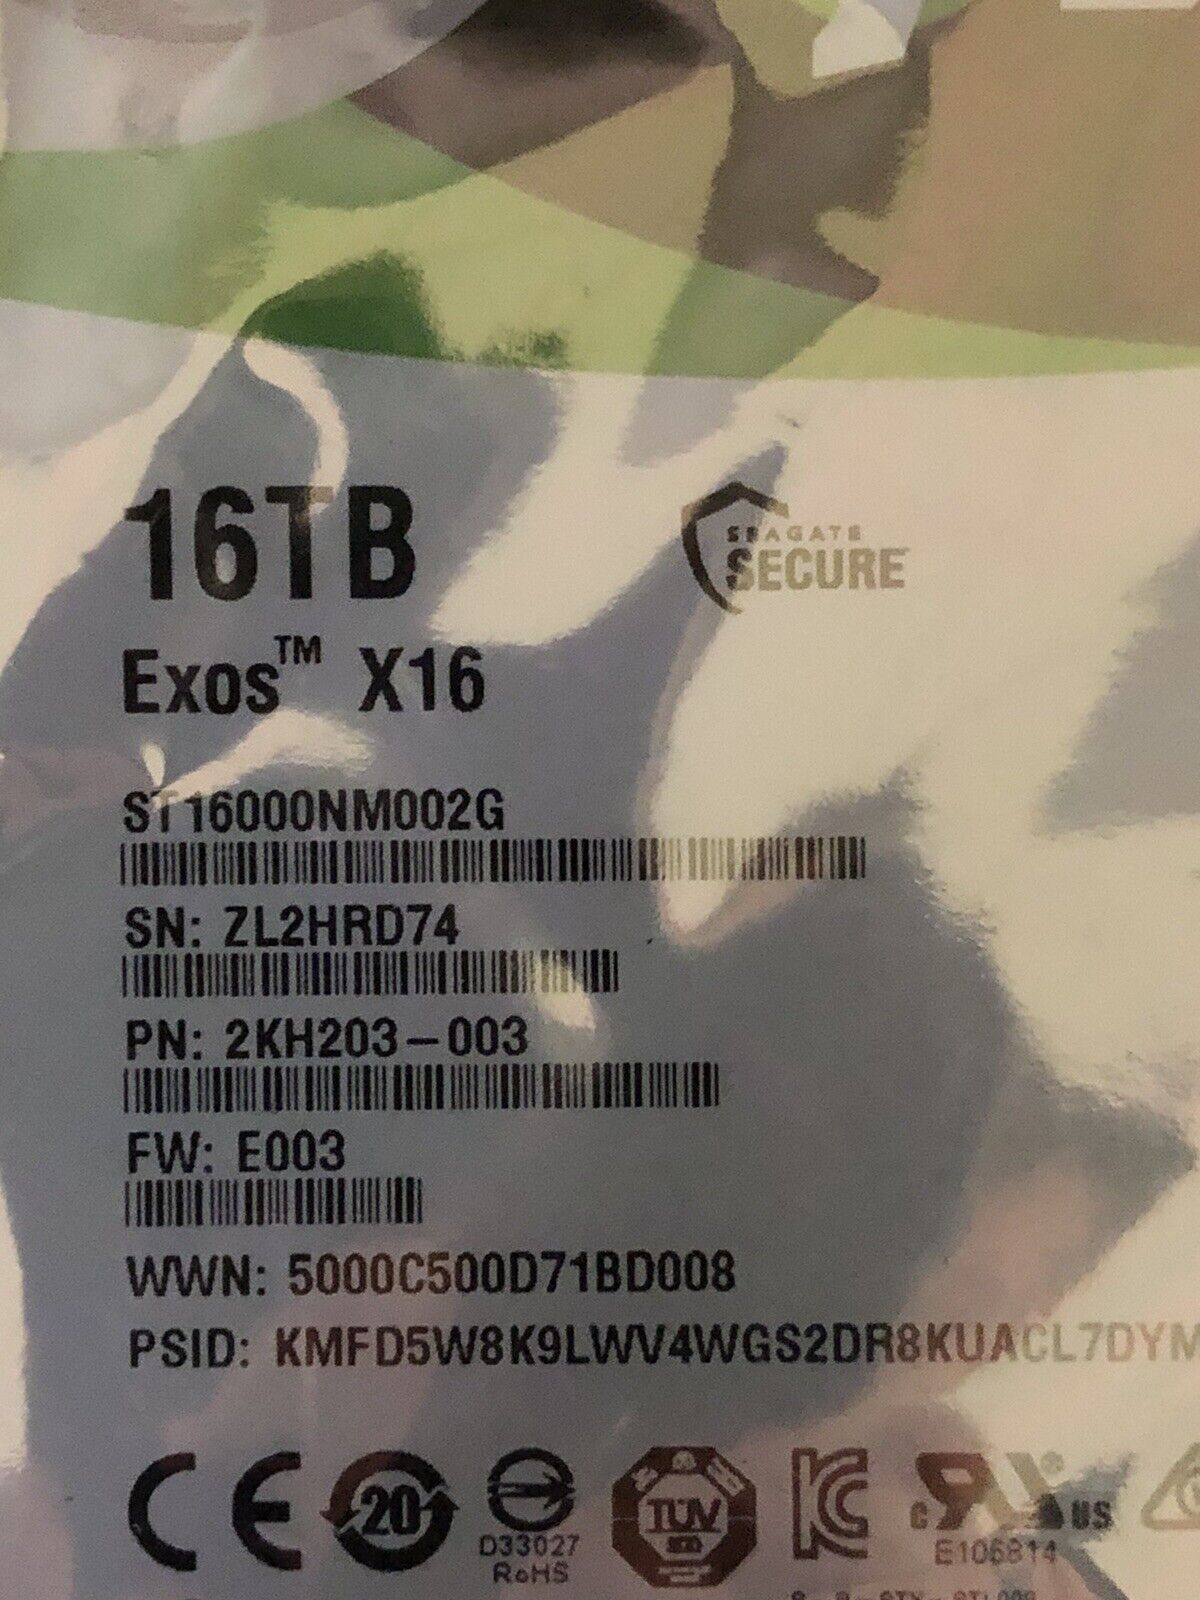 Seagate Exos X16 2KH203-003 16TB SAS 12Gb/s 7.2K rpm 3.5" LFF HDD Hard Disk Drive